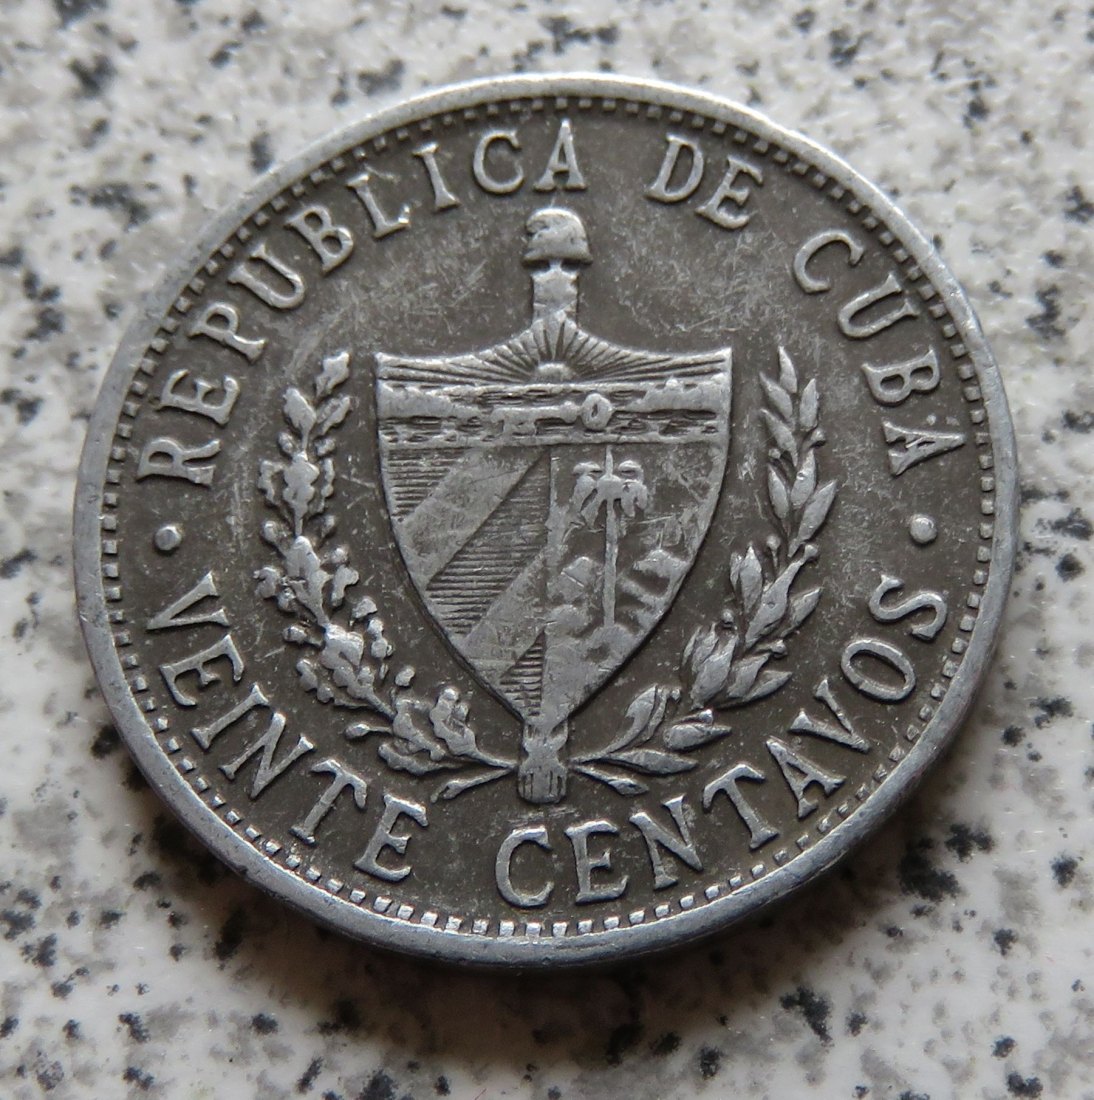  Cuba 20 Centavos 1971   